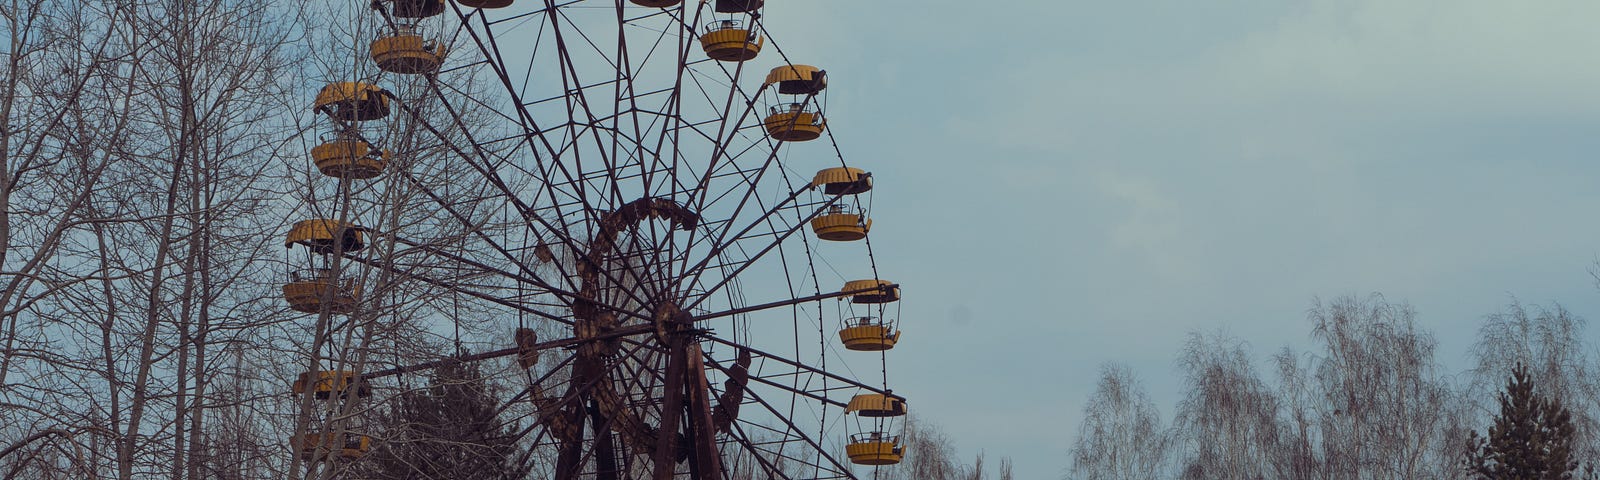 Abandoned Ferris wheel in Chernobyl